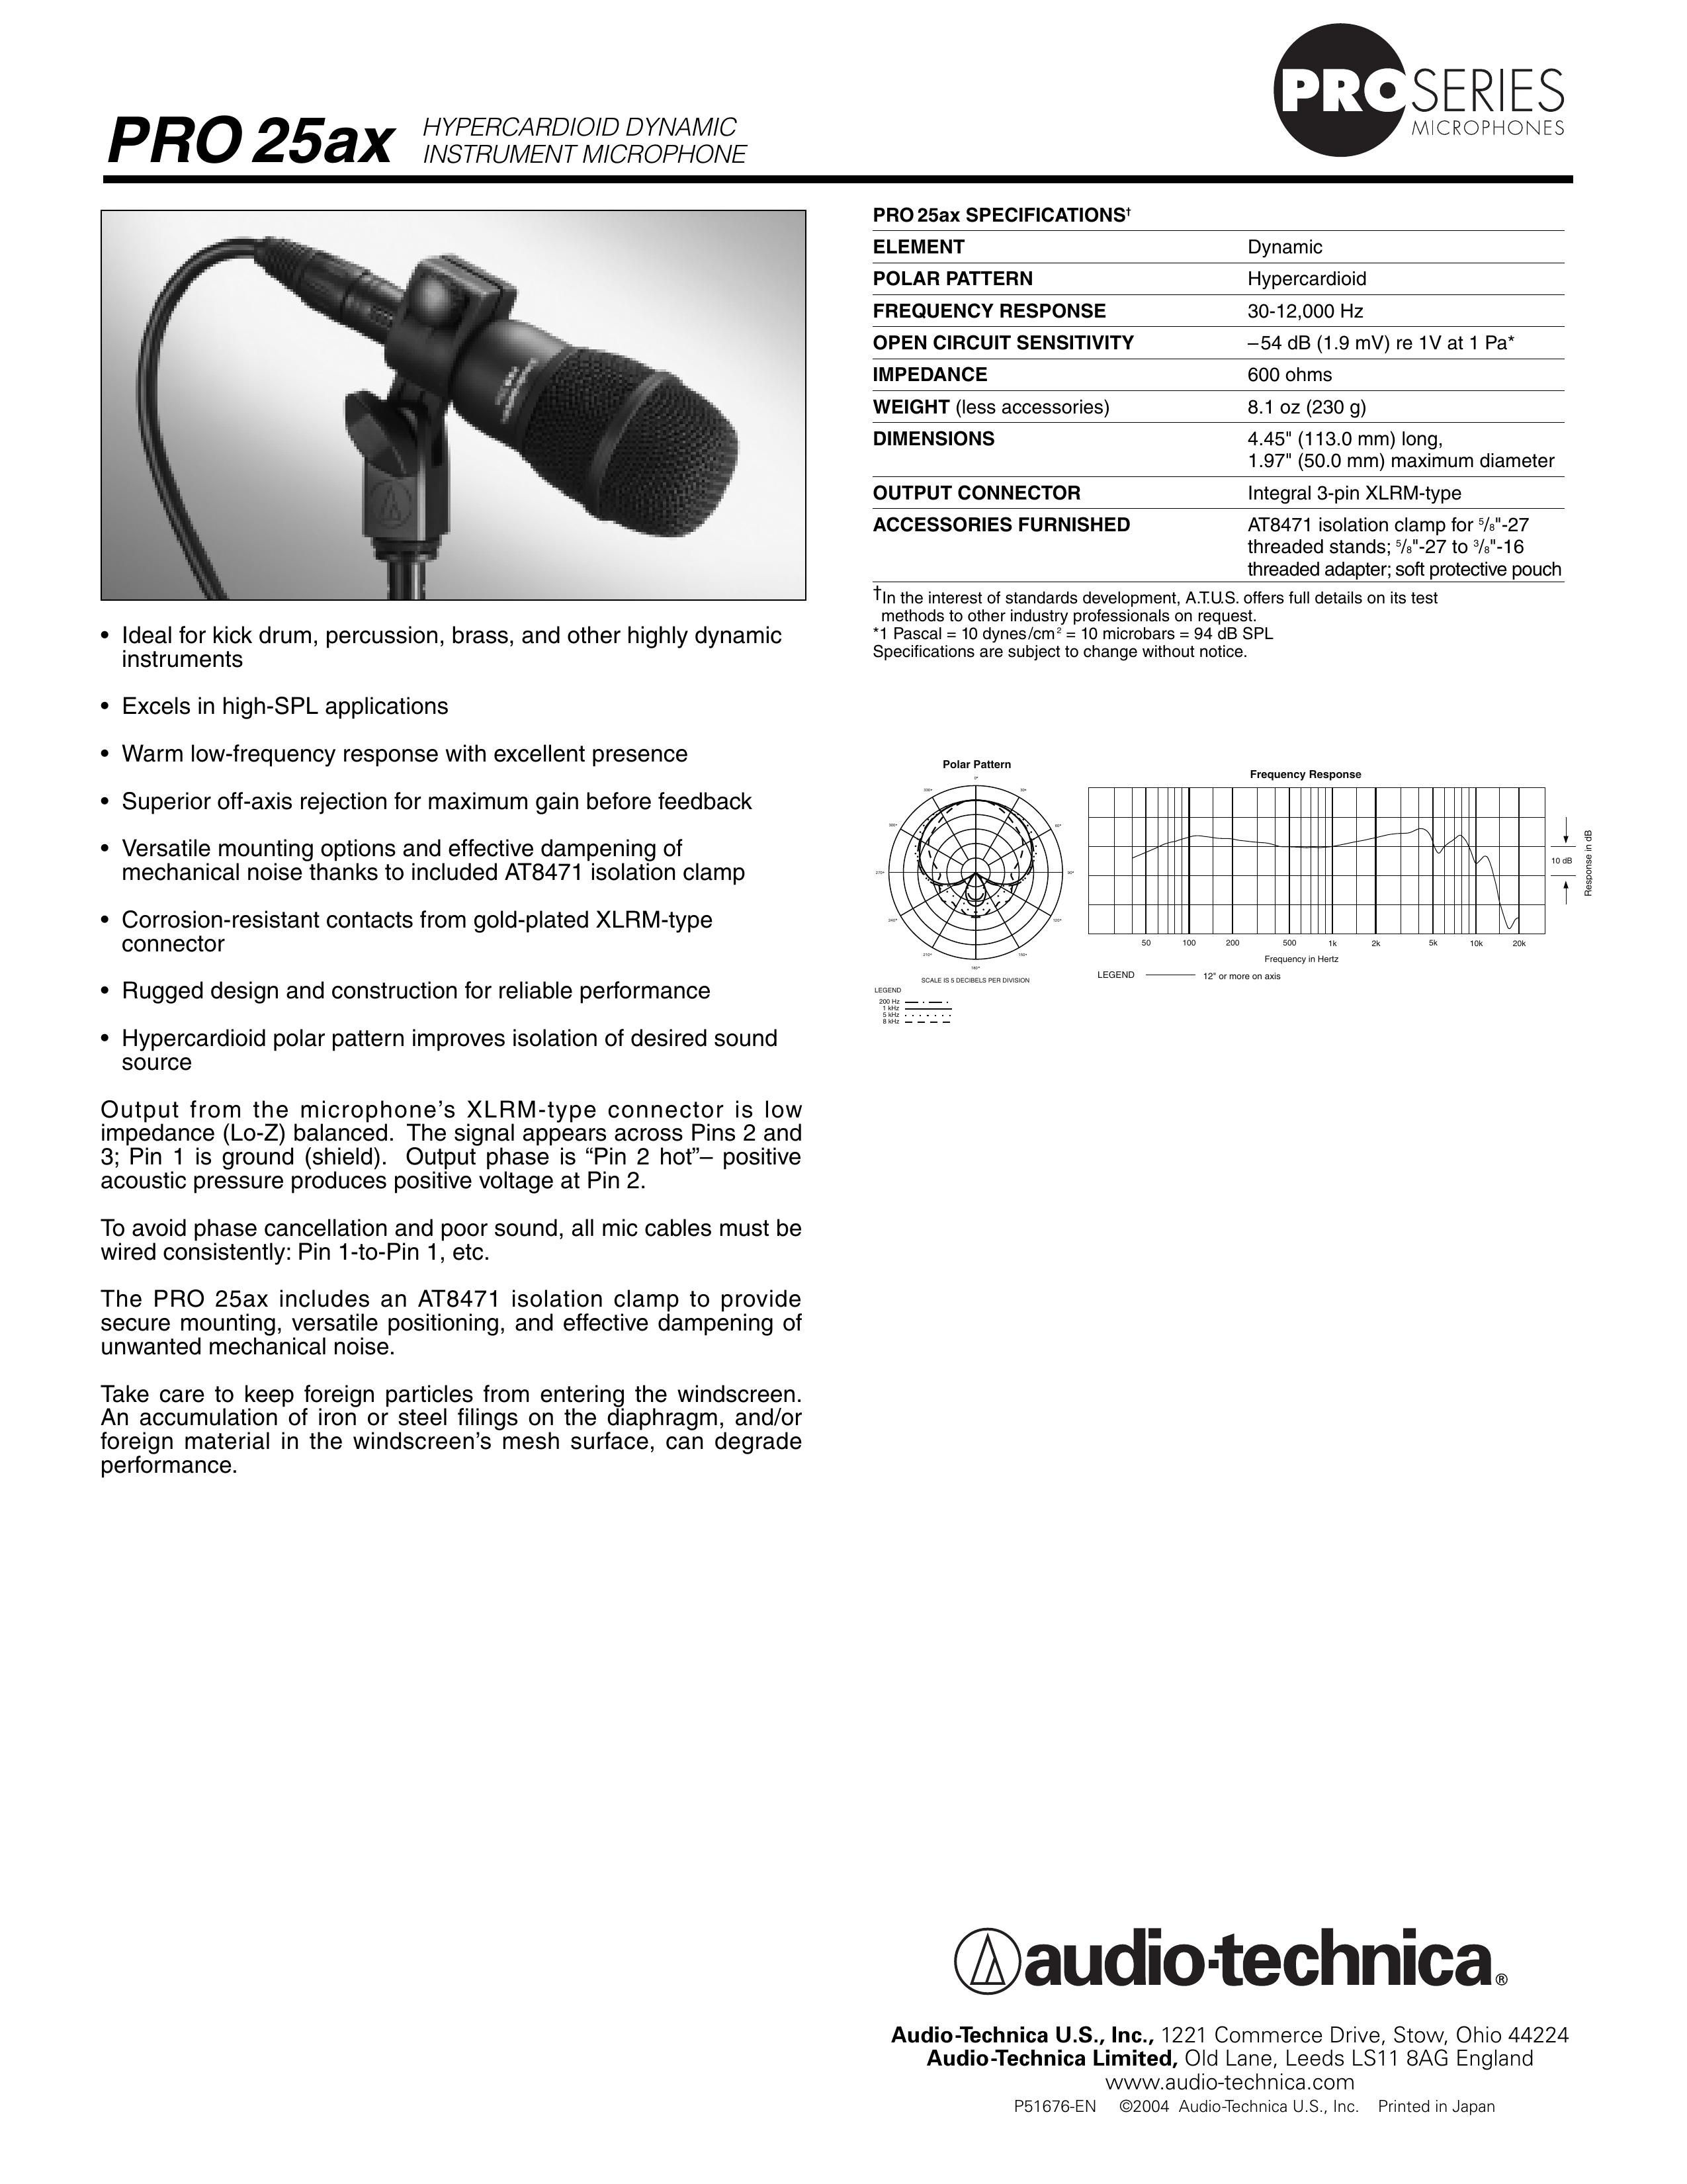 Audio-Technica 25ax Microphone User Manual